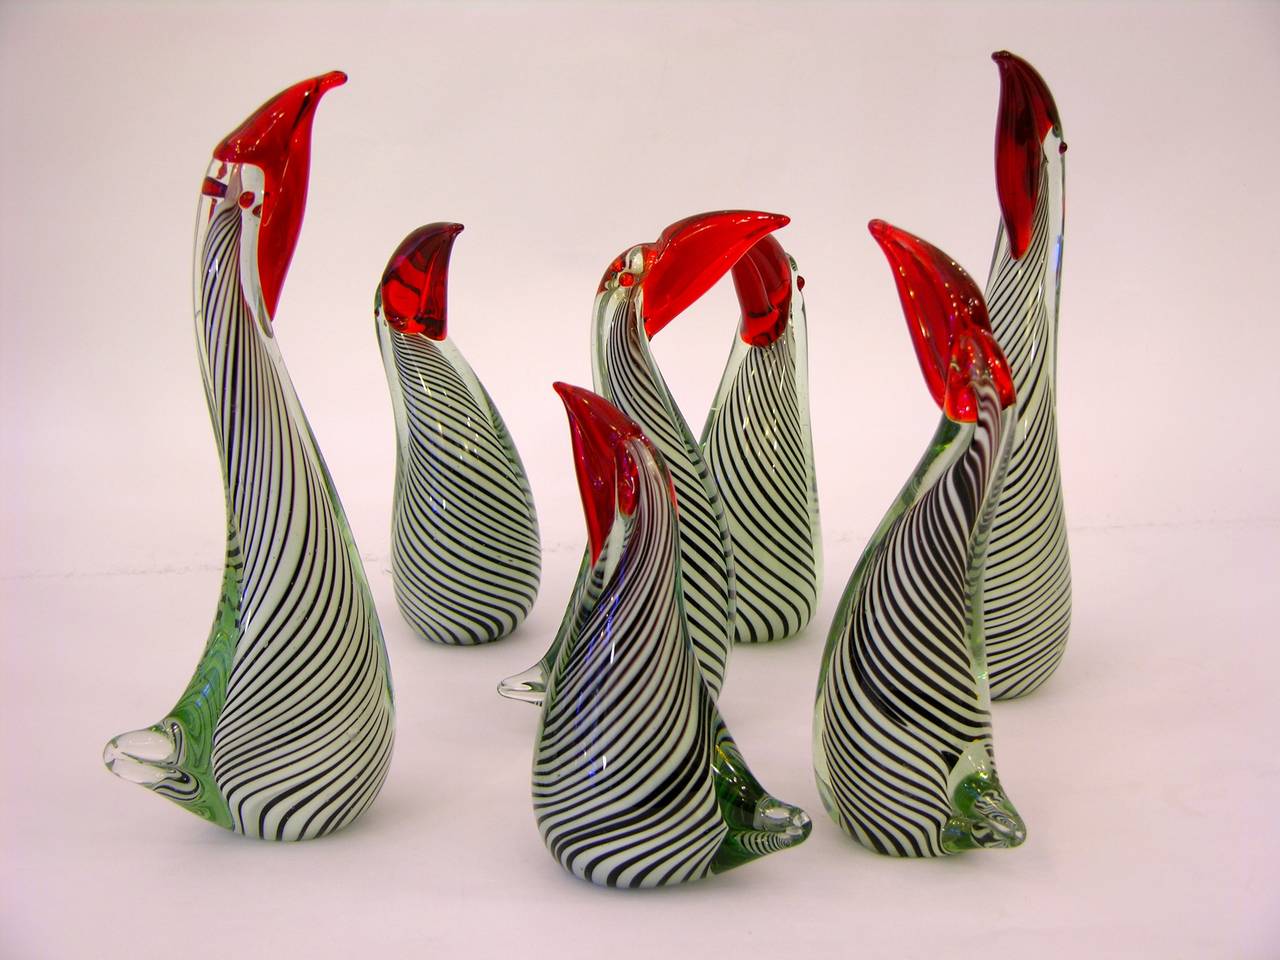 1970s Italian Murano Glass Family of Toucan Birds Sculptures 4